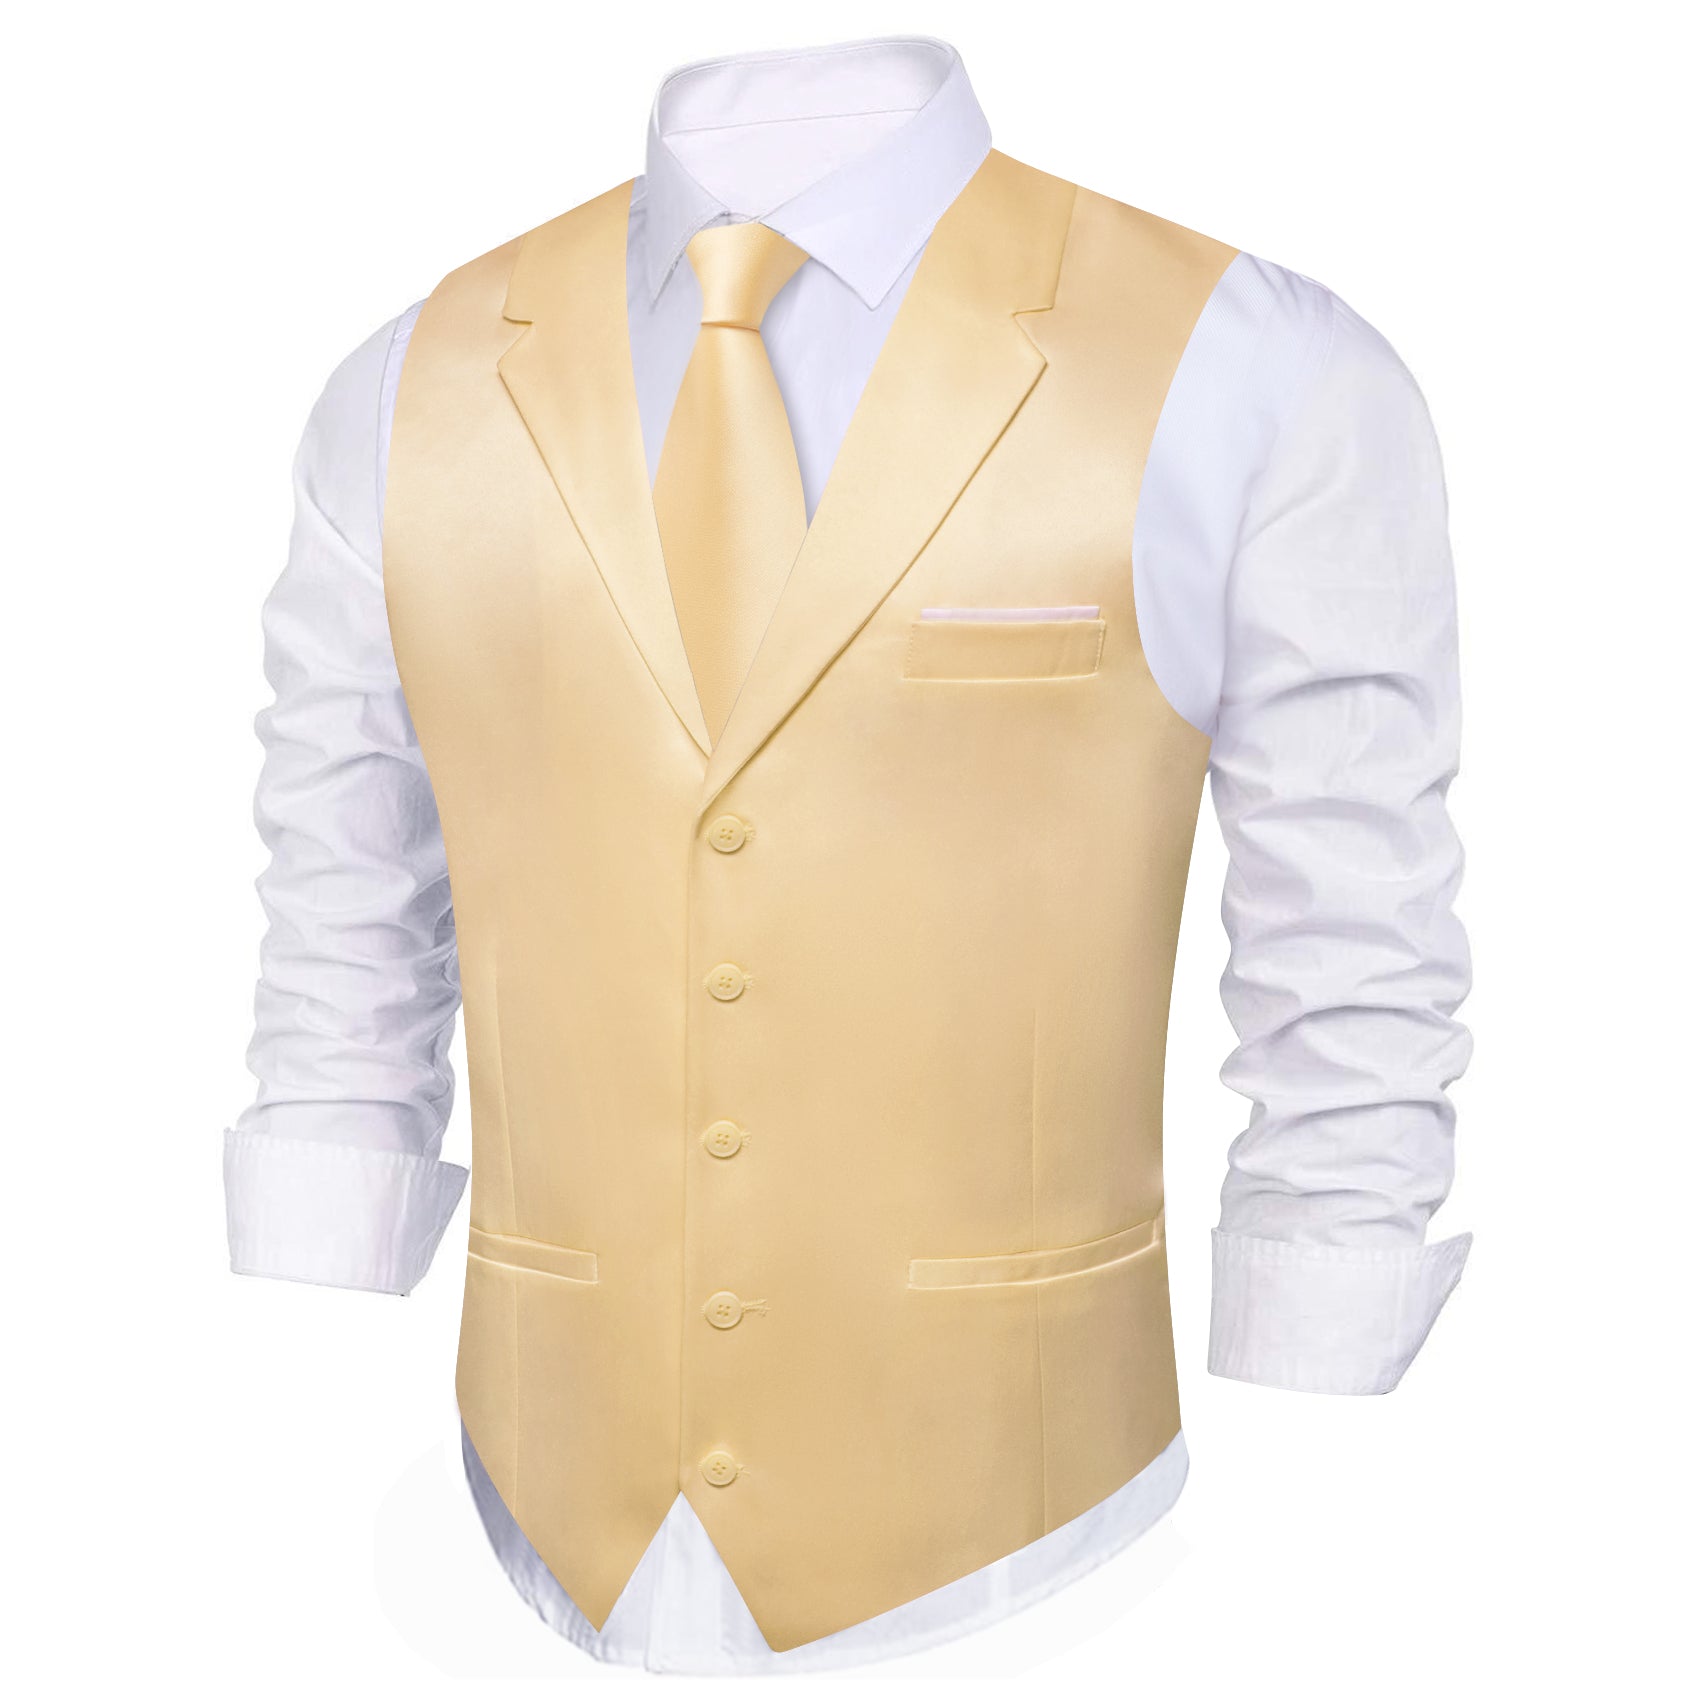 Barry.wang Mist Yellow Solid Vest Waistcoat Set